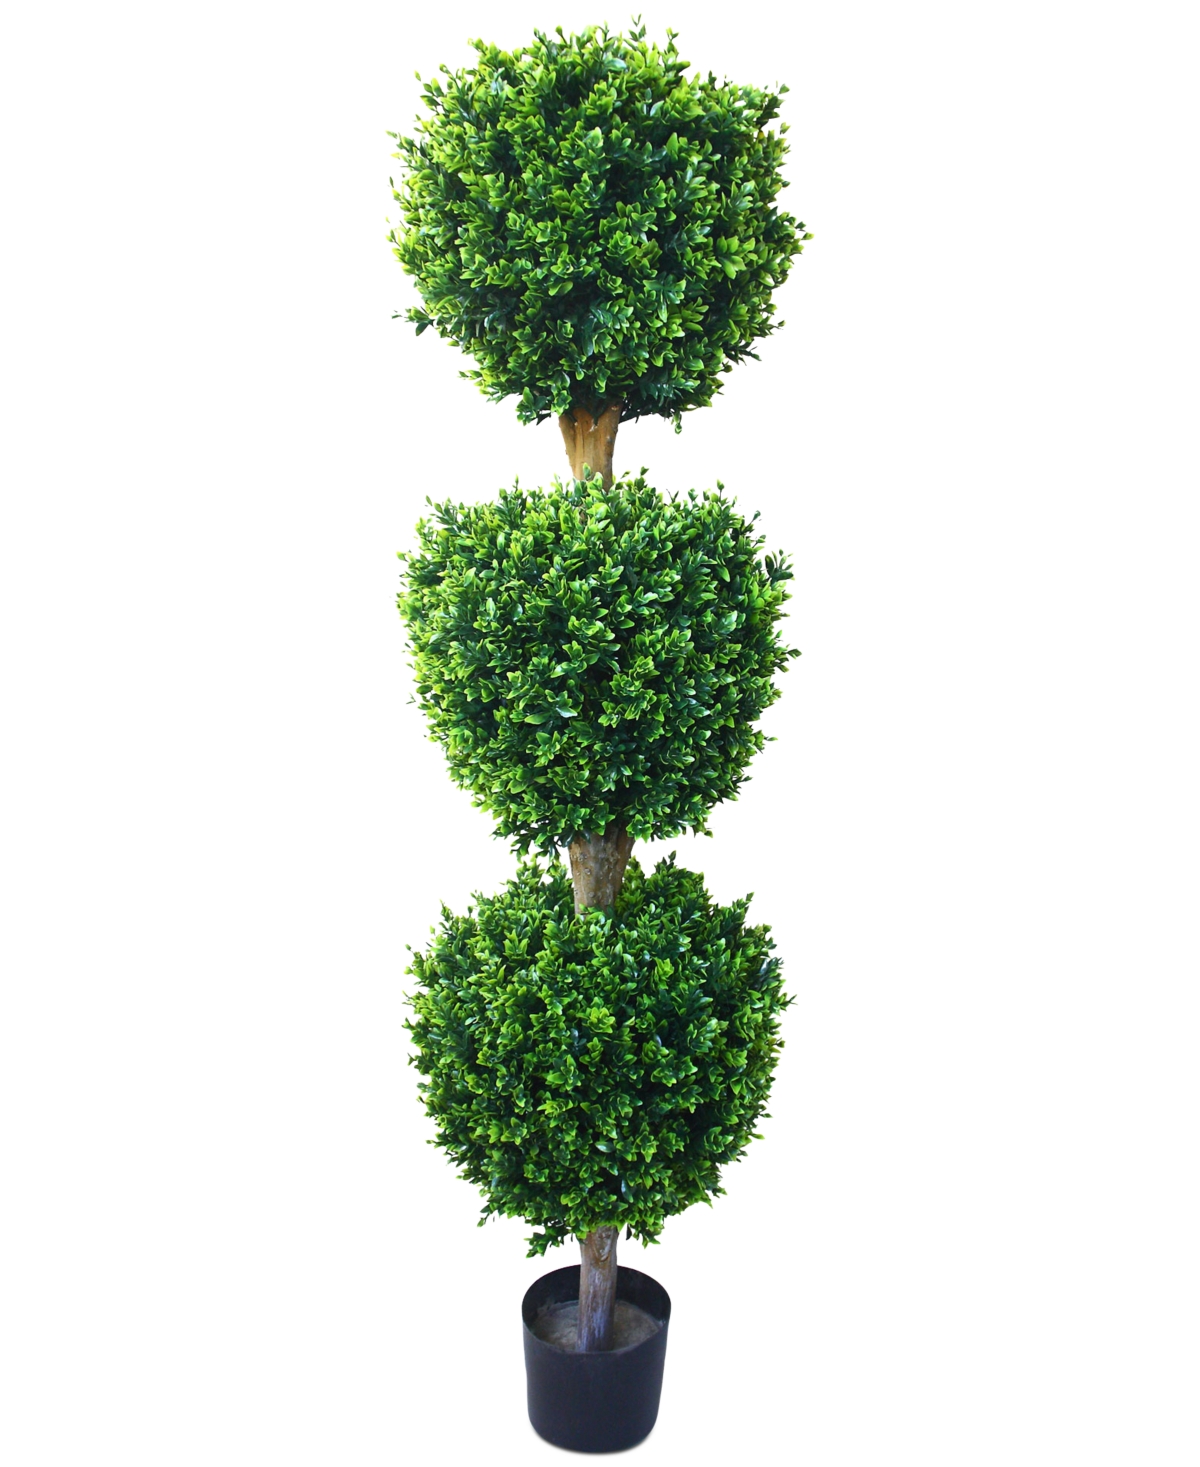 Hedyotis Triple Ball 5 Ft. Artificial Tree by Pure Garden, 60" x 15" x 15" - Green